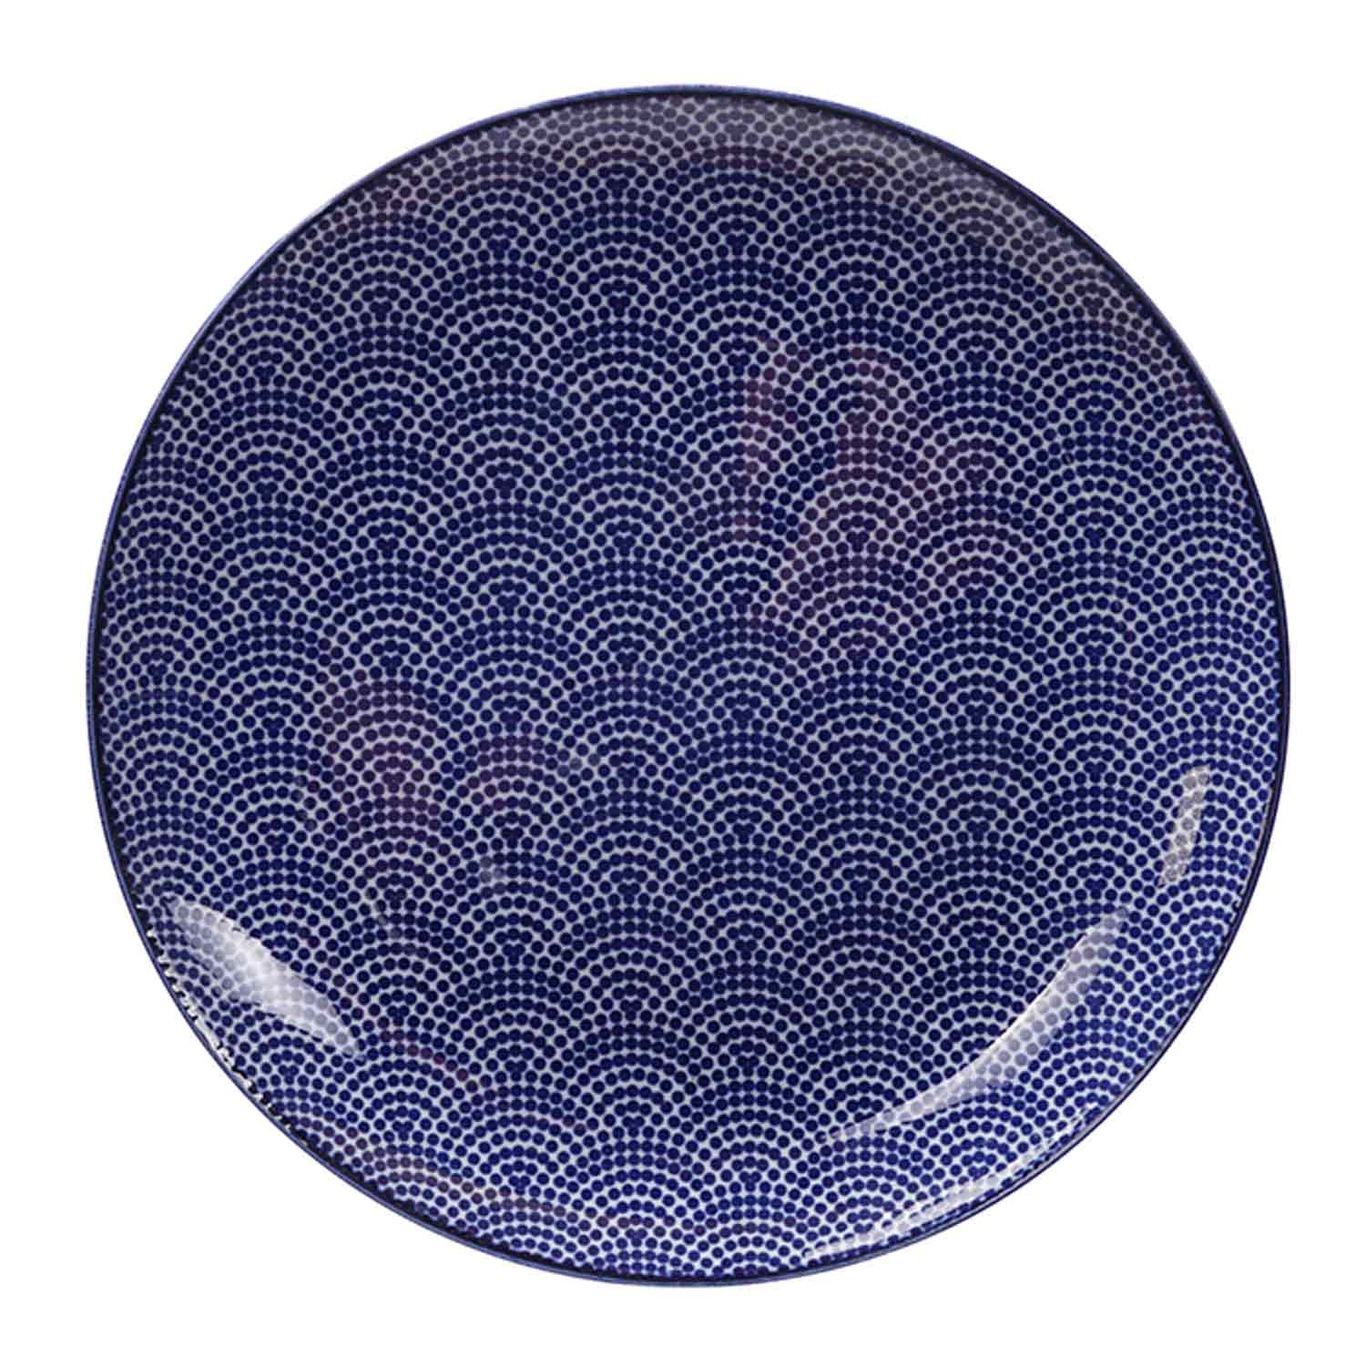 Nippon Blue Plate 20,6 cm, Dots